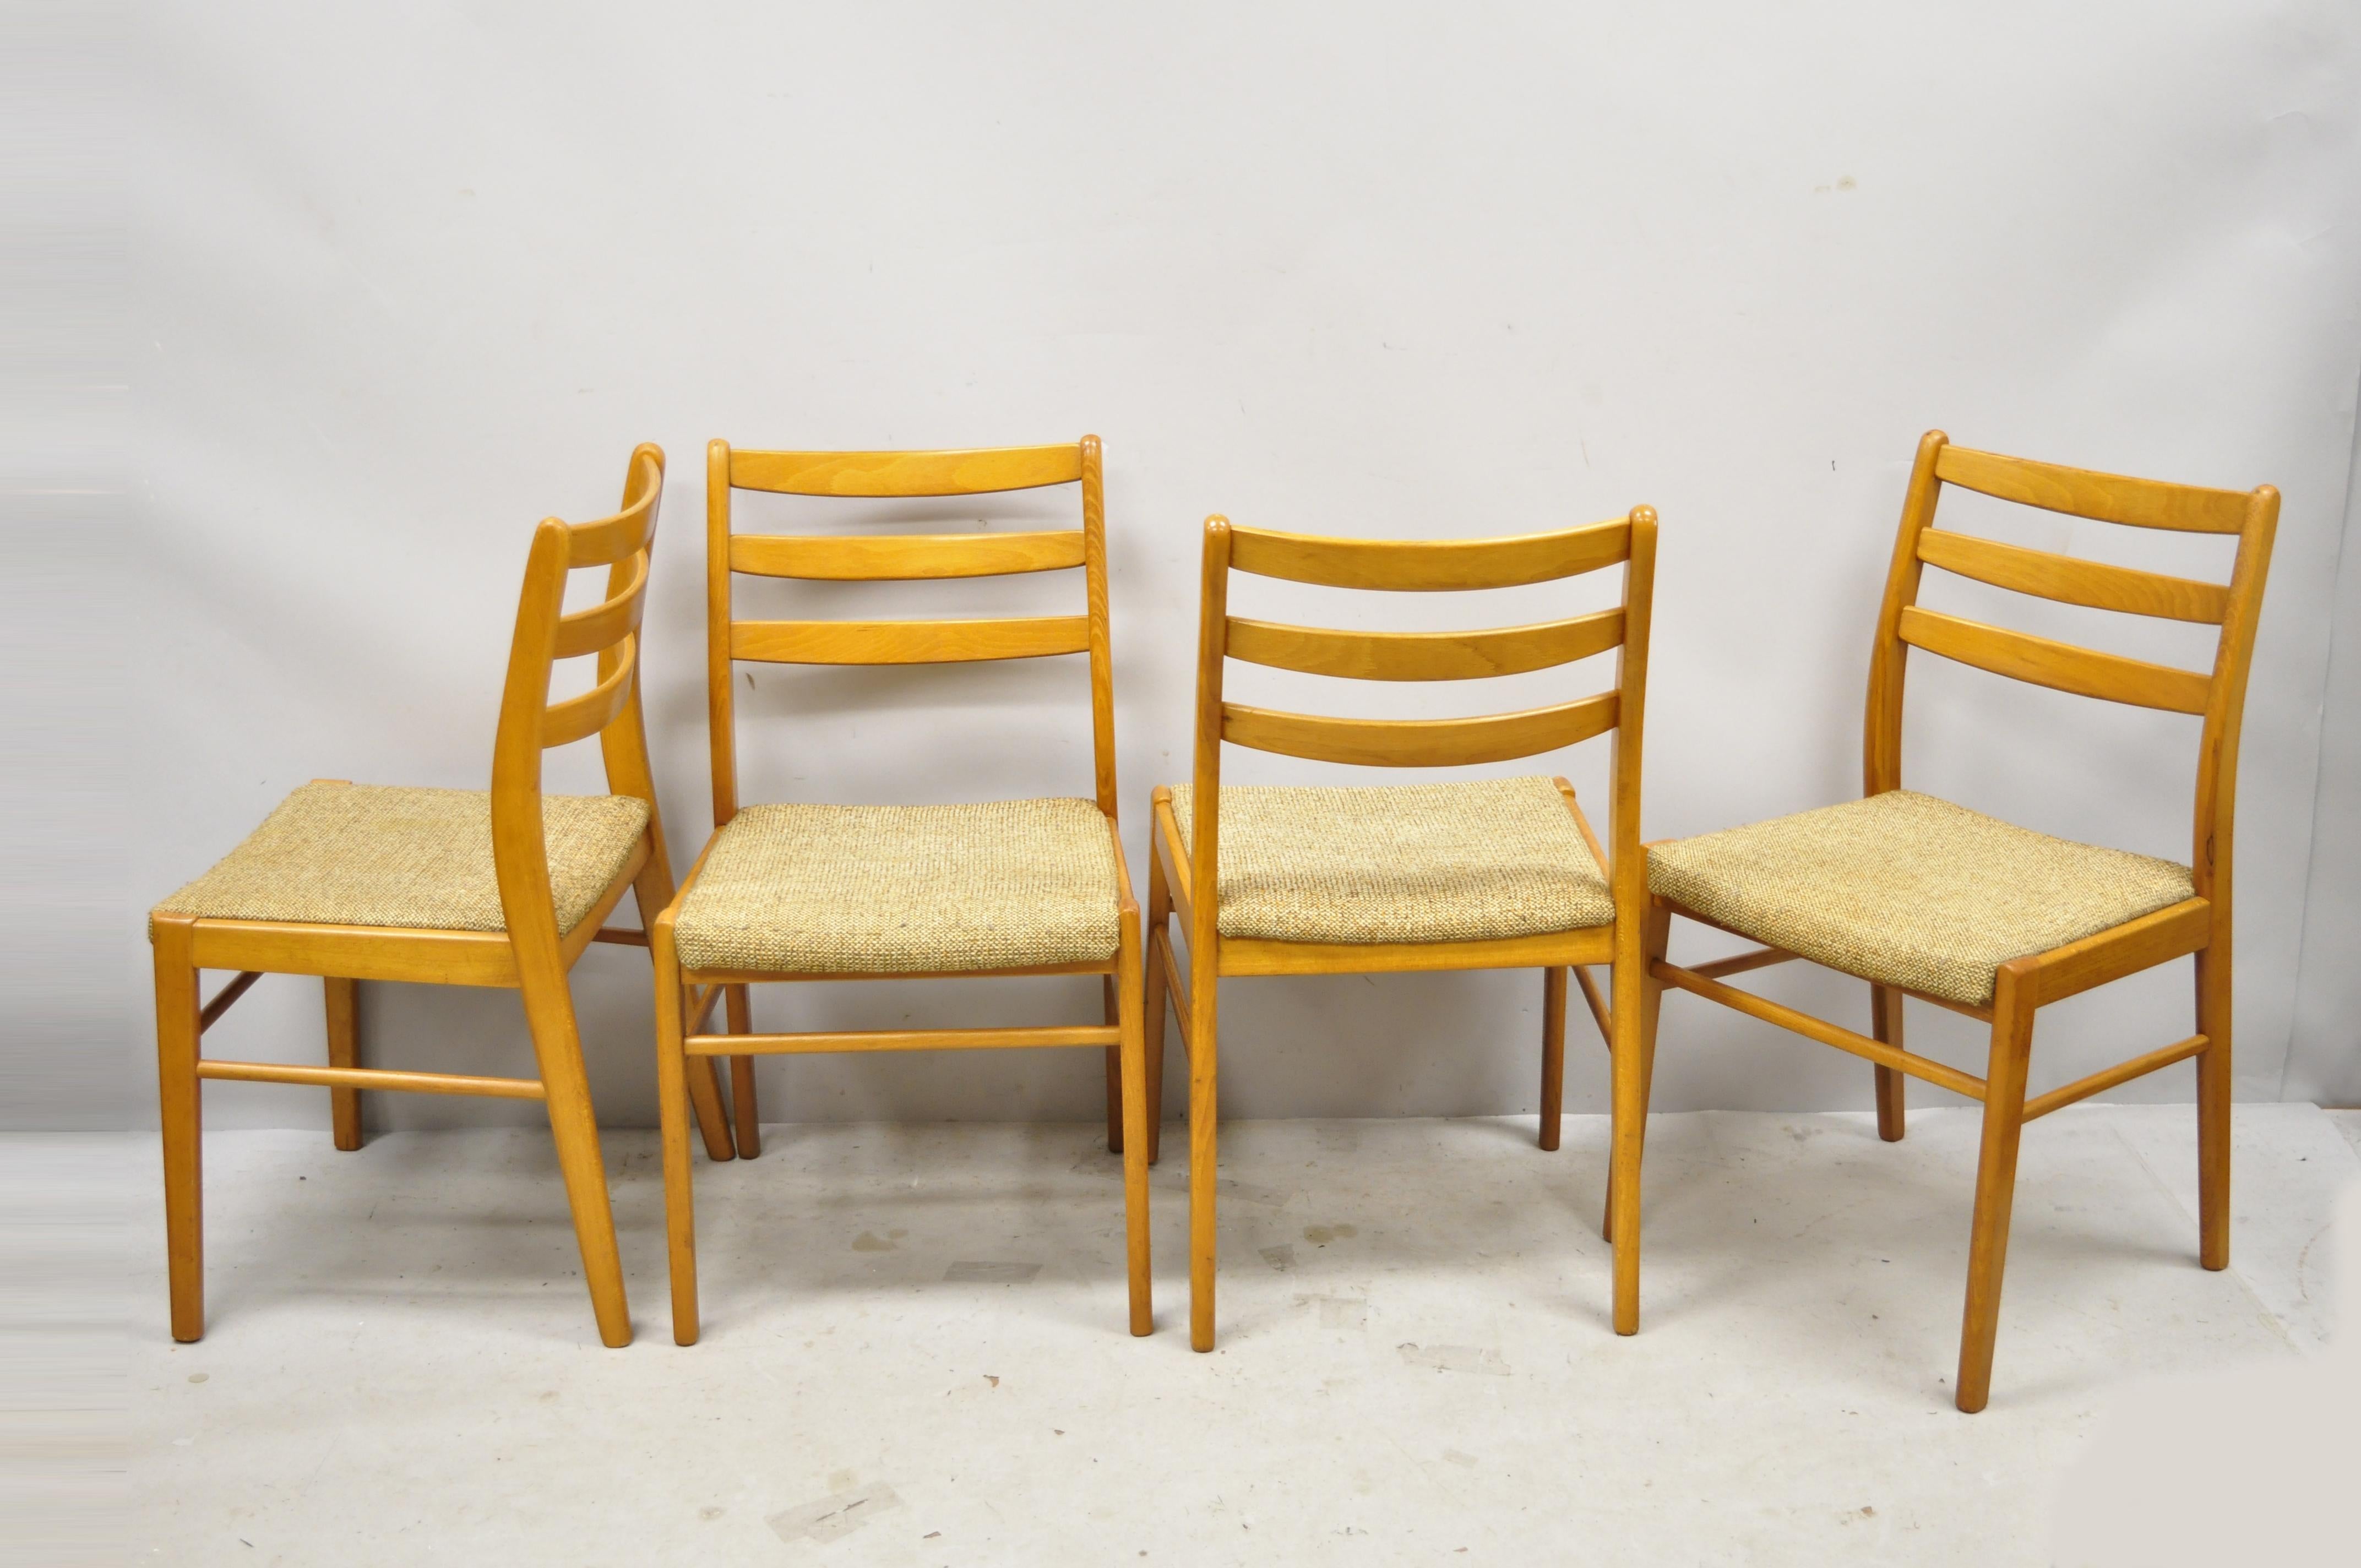 Vintage Midcentury Danish Modern Teak Ladderback Dining Room Chairs, Set of 4 For Sale 5